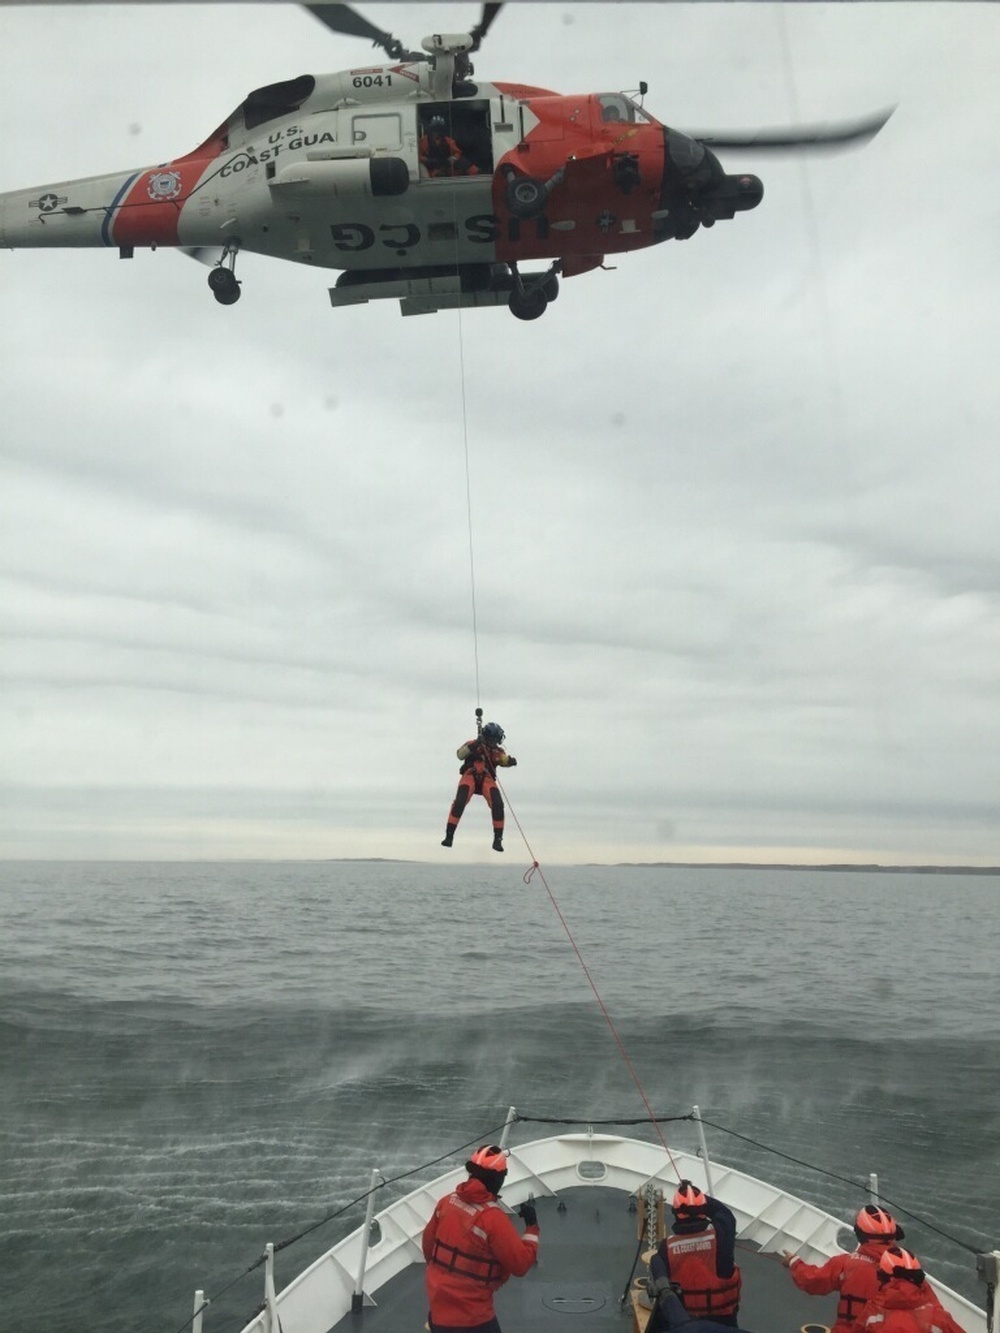 DVIDS - Images - Coast Guard hoist training in Martha's Vineyard Sound